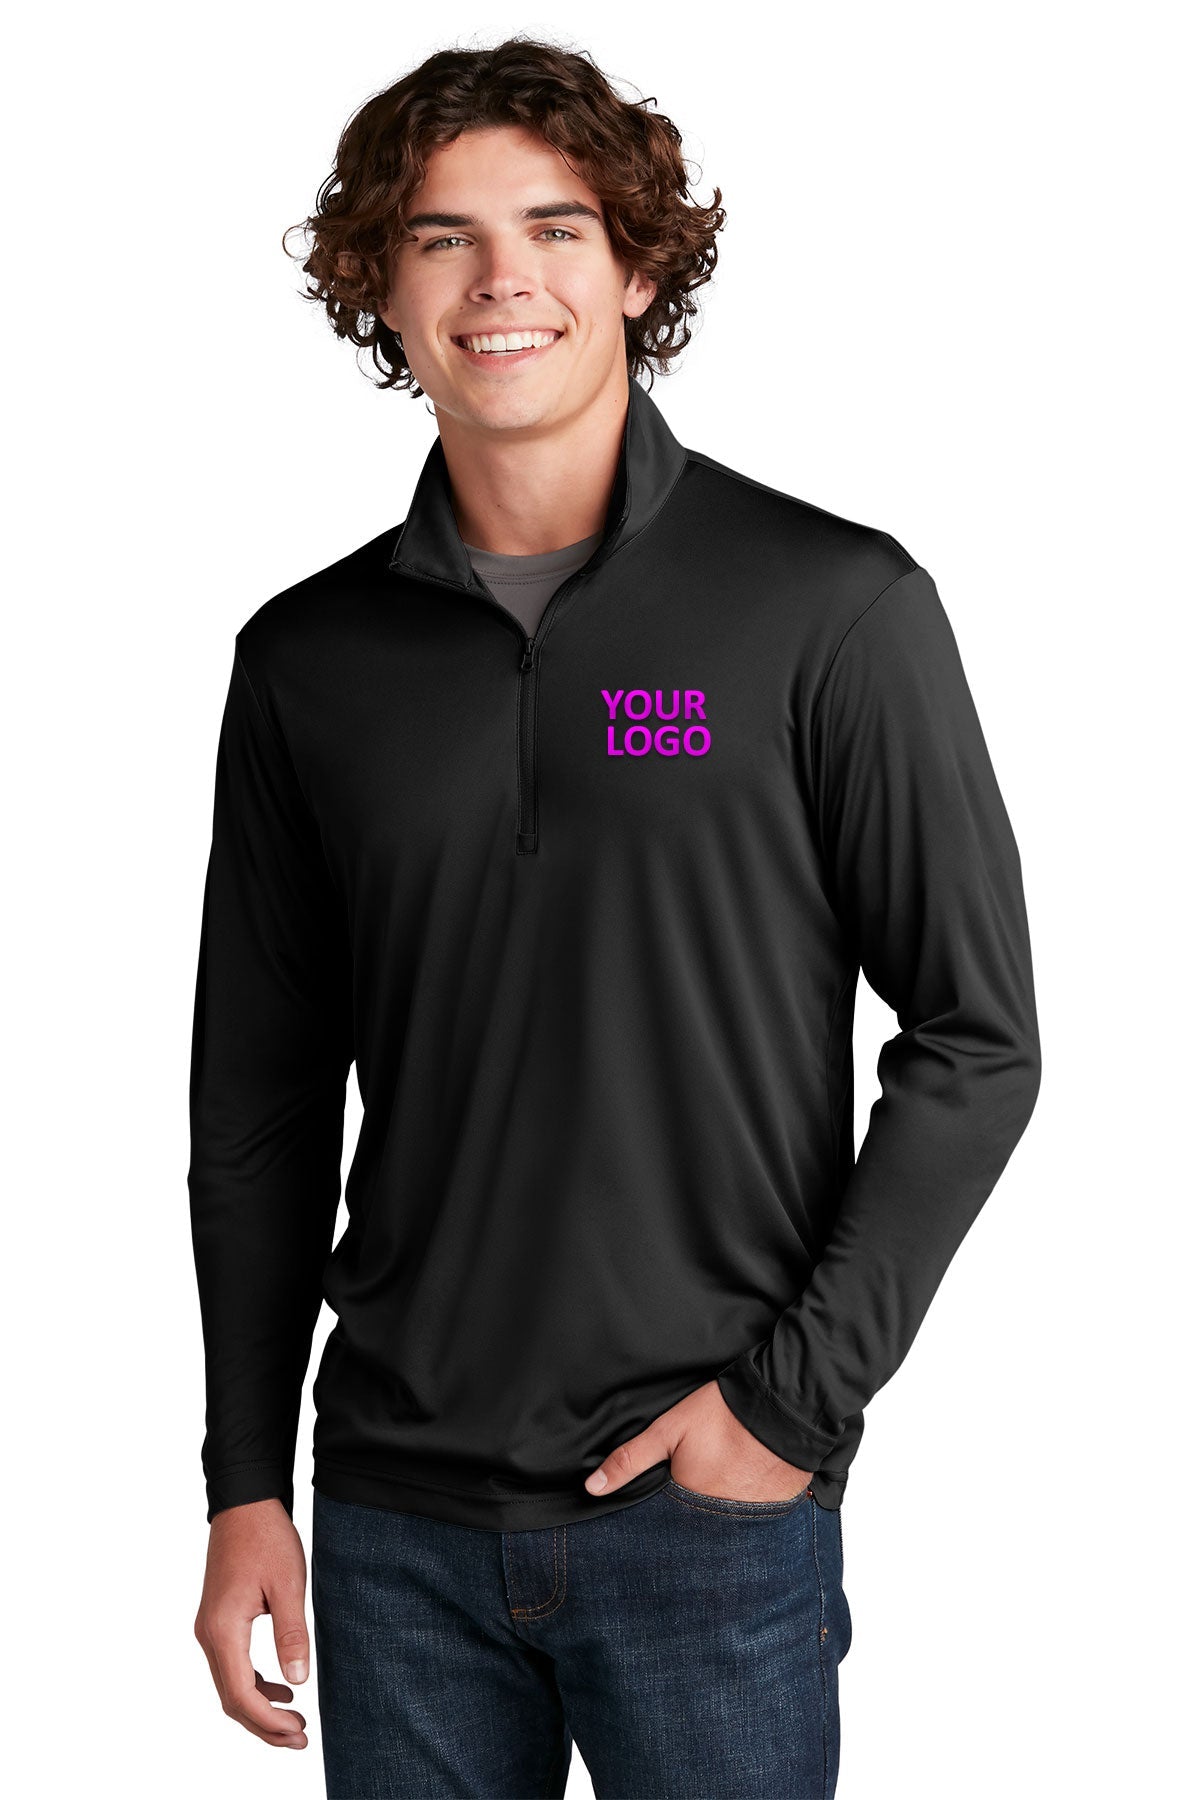 Sport-Tek Black ST357 custom sweatshirts for business